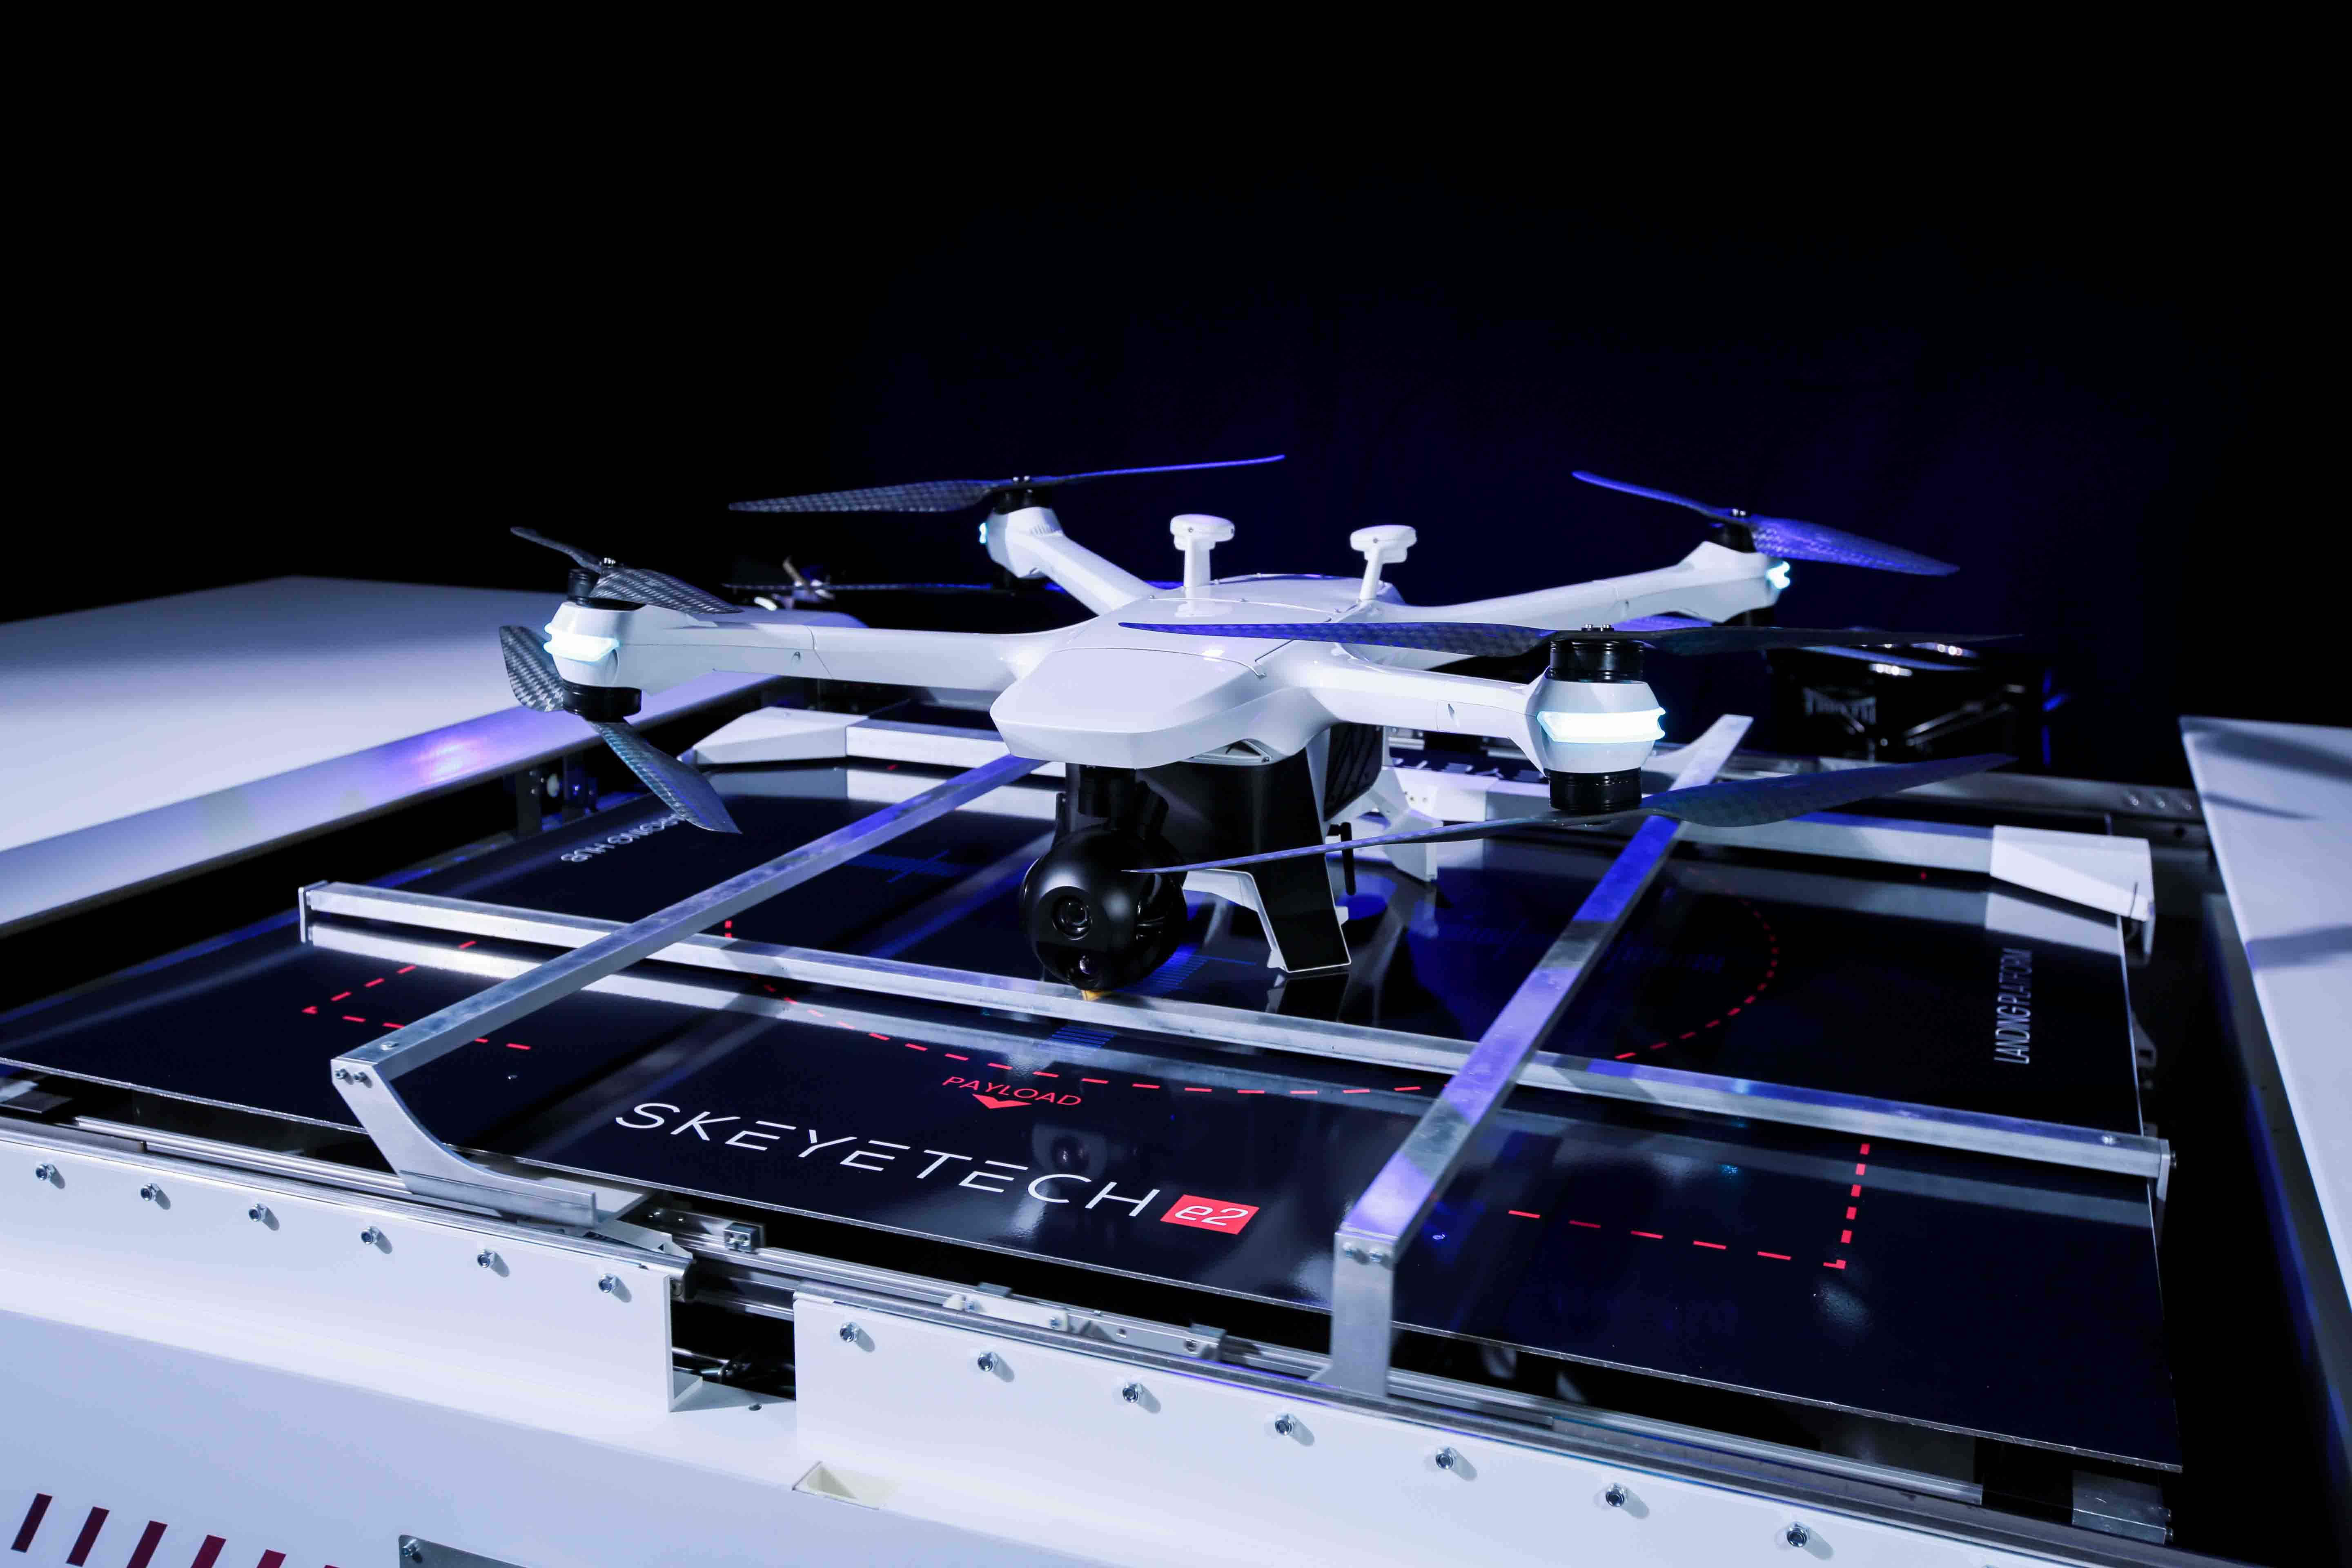 Bavak delivers the autonomous drone as a 'turn-key' solution